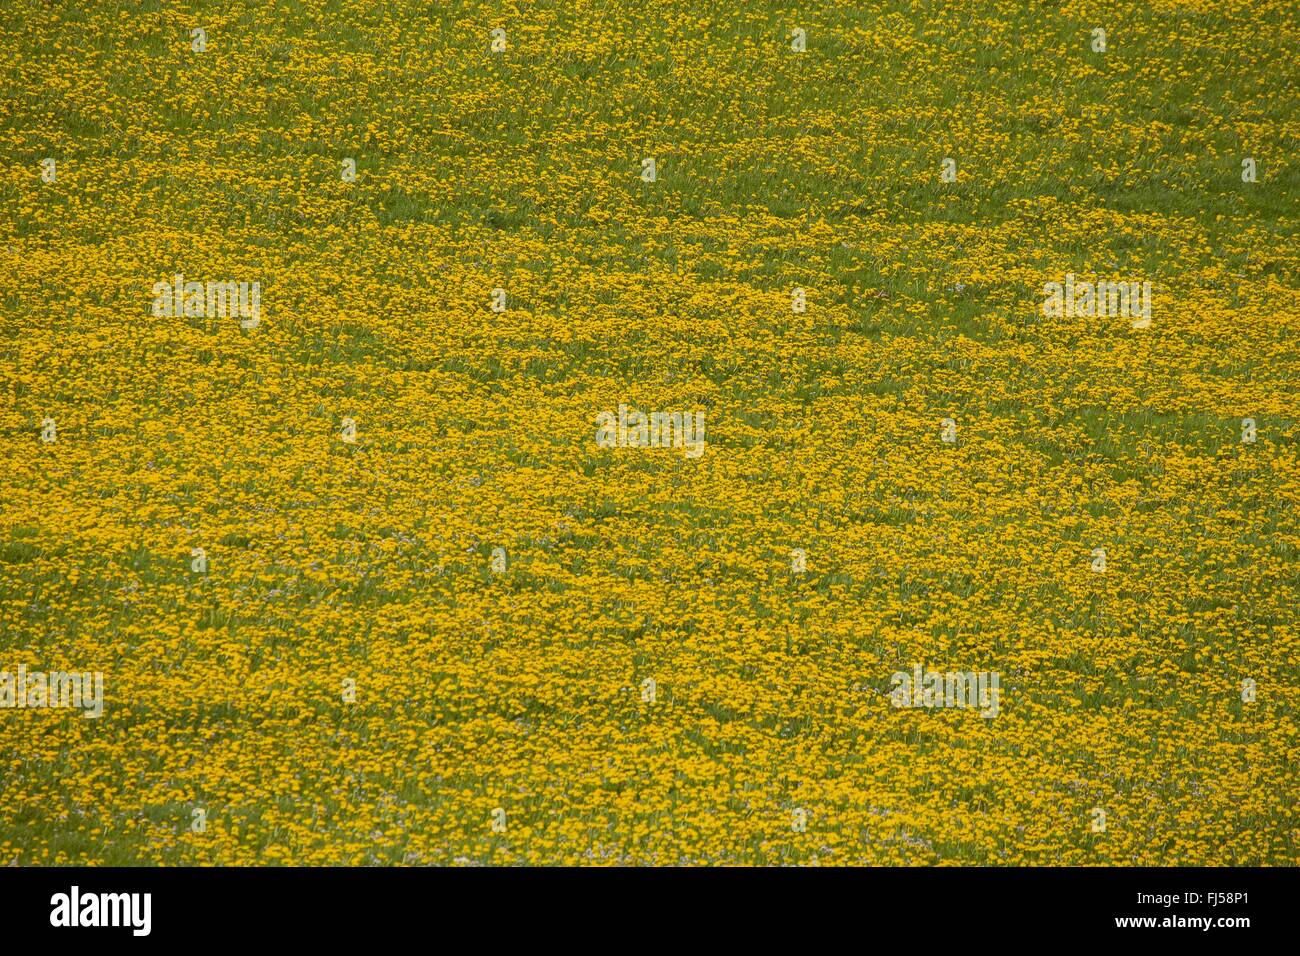 common dandelion (Taraxacum officinale), plentiful blooming dandelion in a meadow, Germany Stock Photo